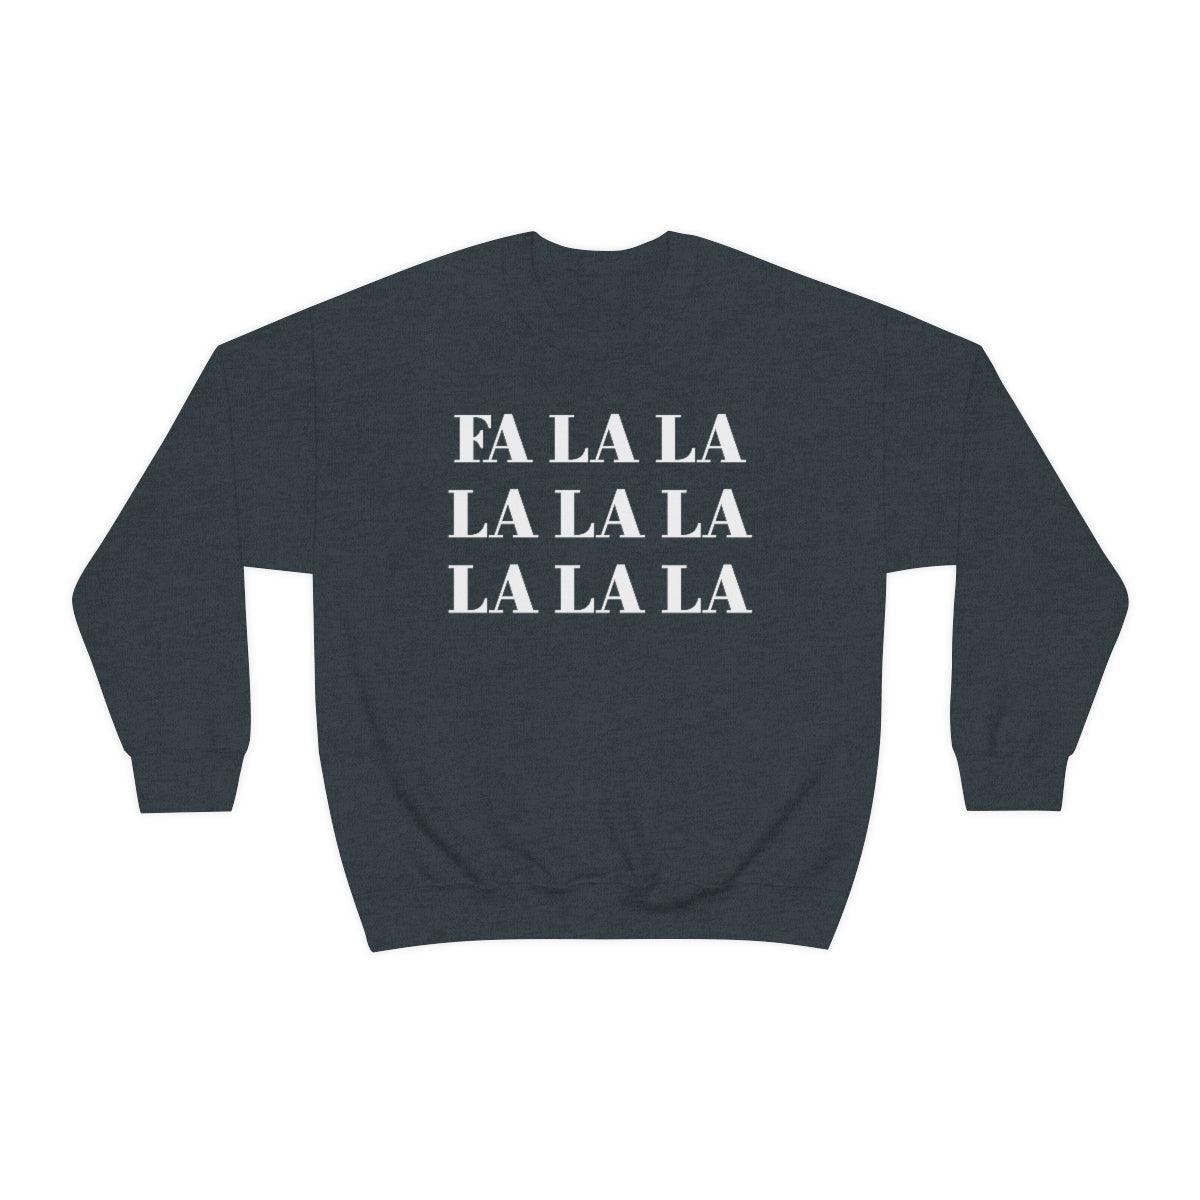 Fa La La Christmas Crewneck Sweater - Crystal Rose Design Co.